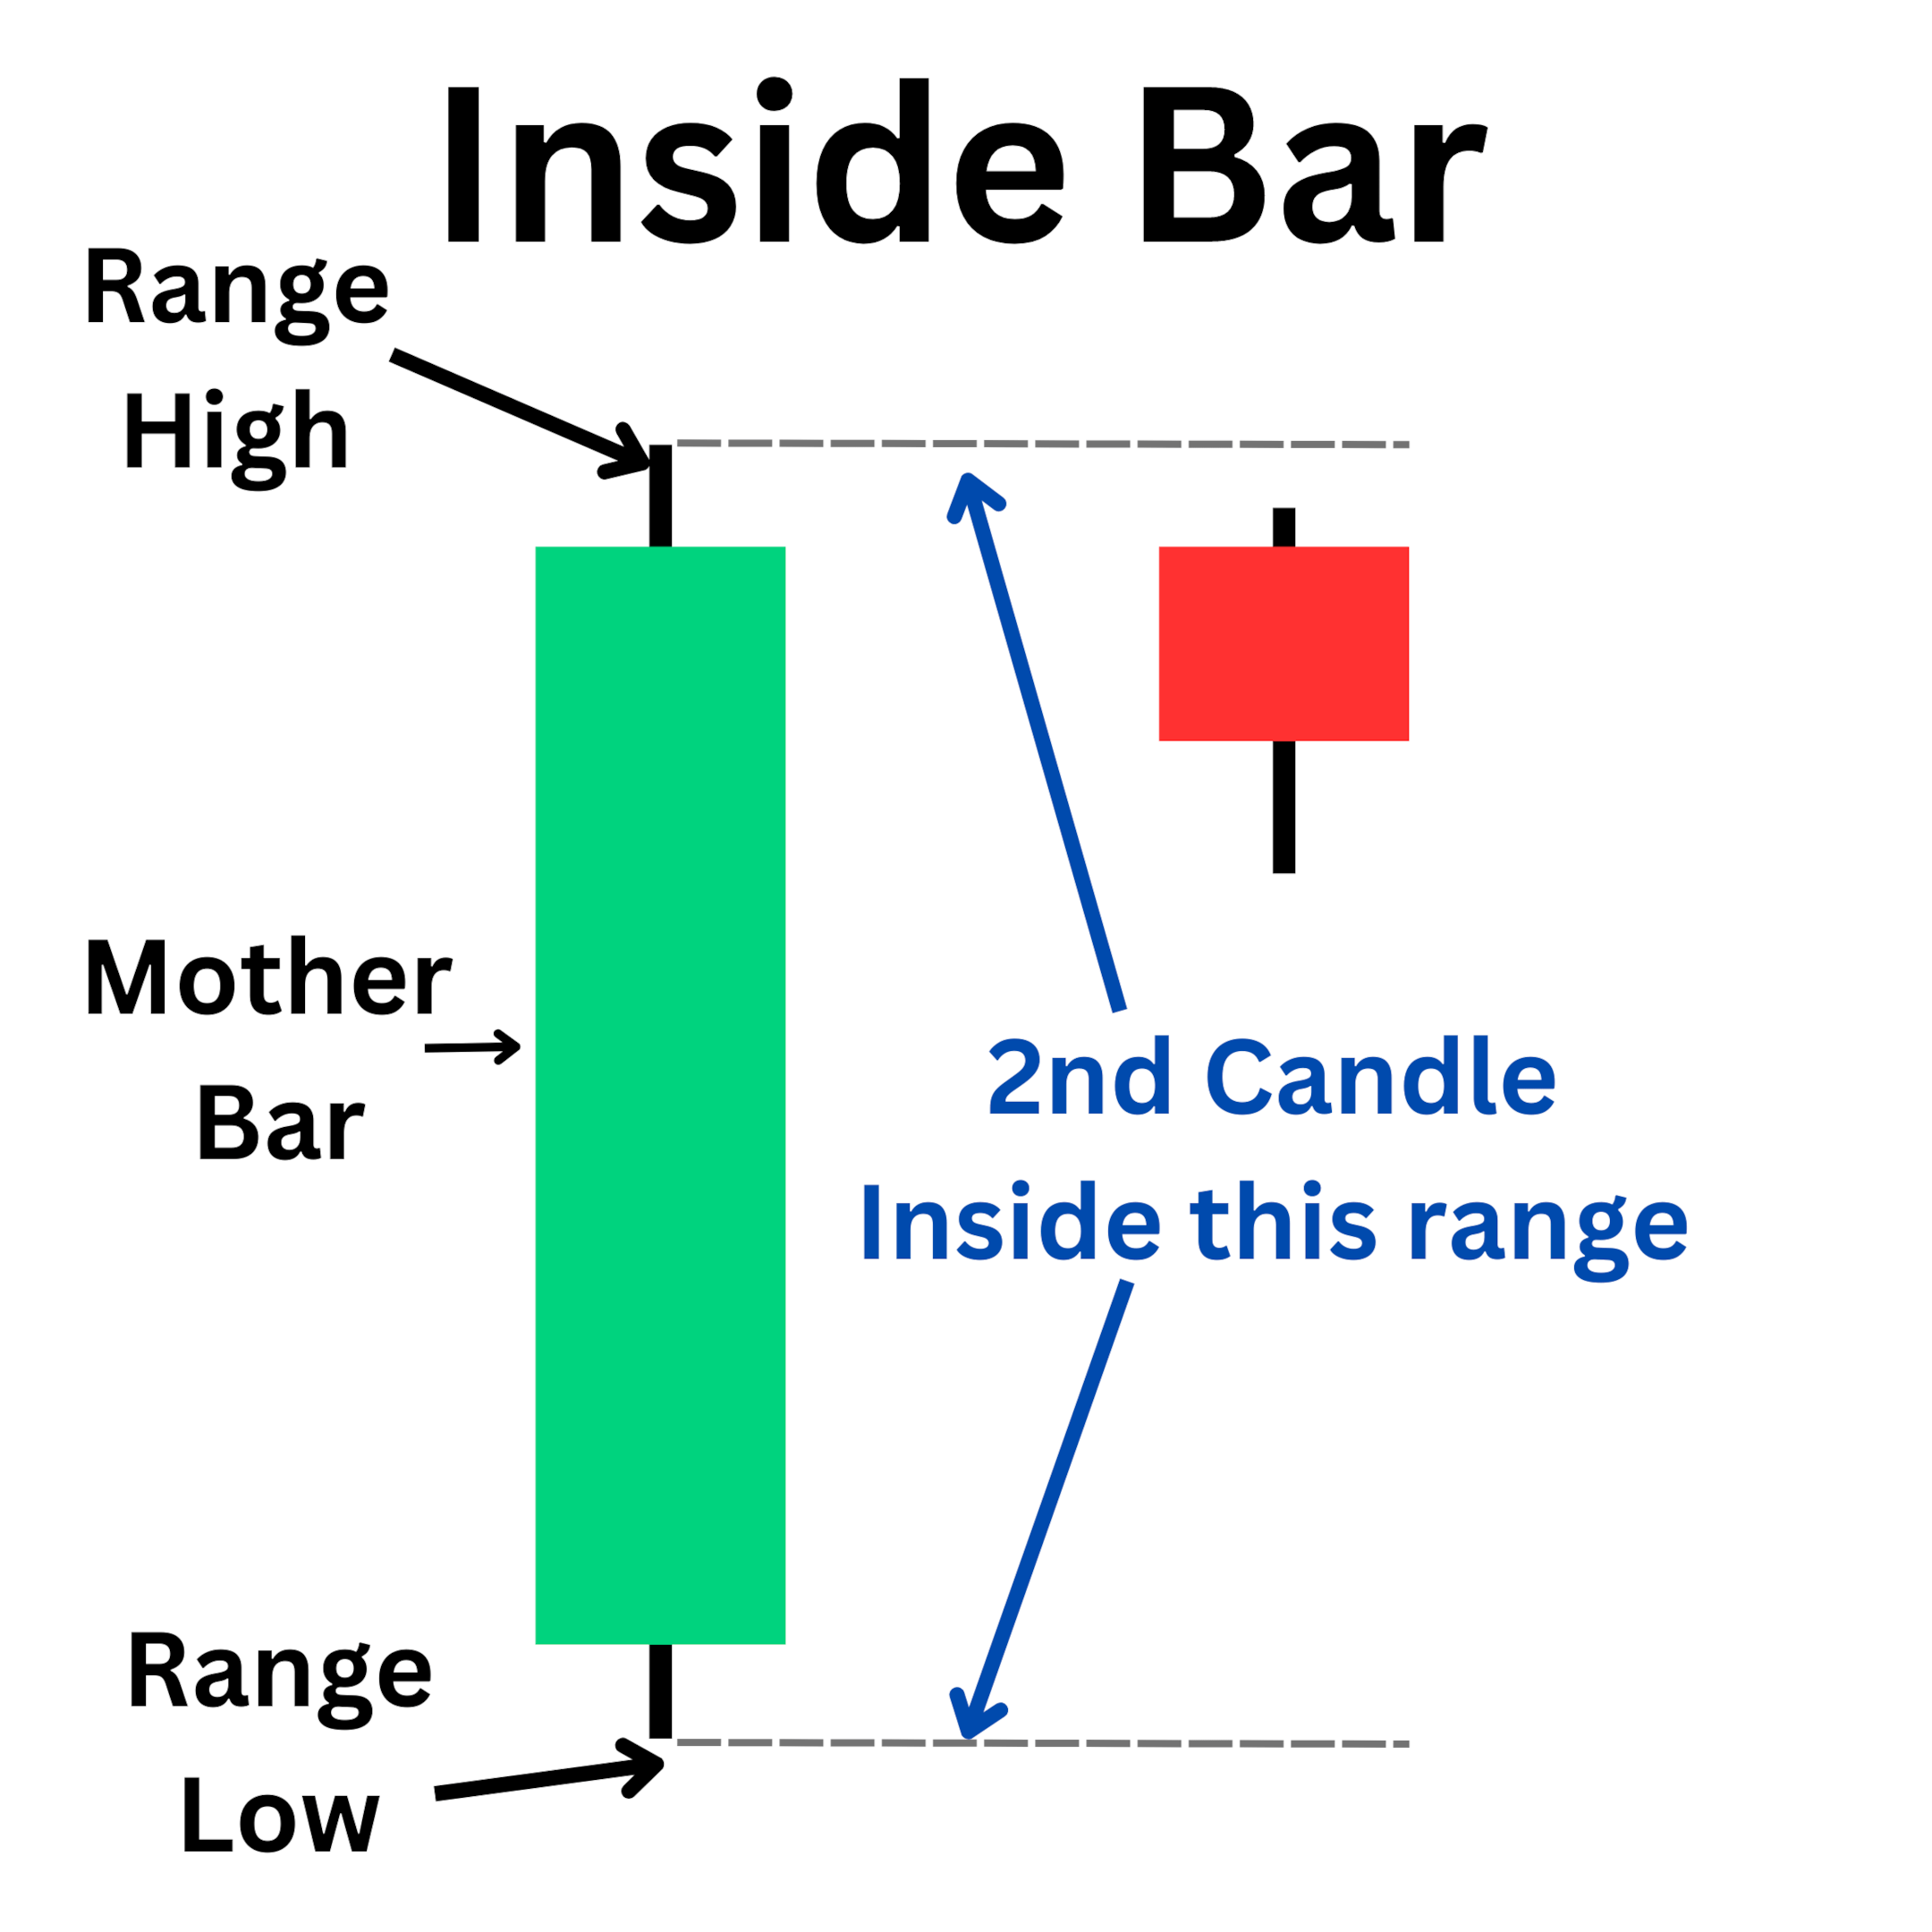 Inside bar illustration.